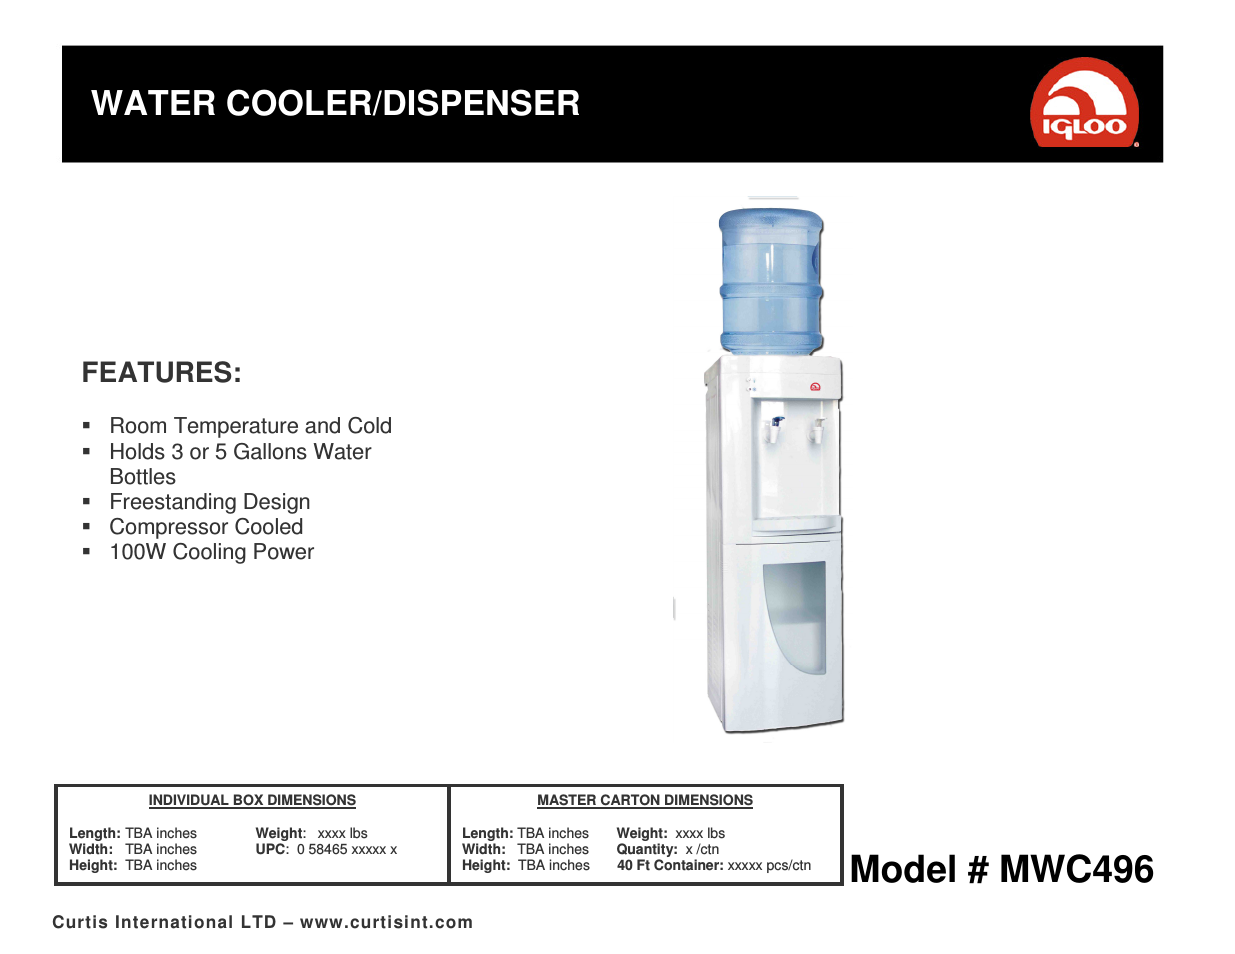 Water Cooler/Dispenser MWC496